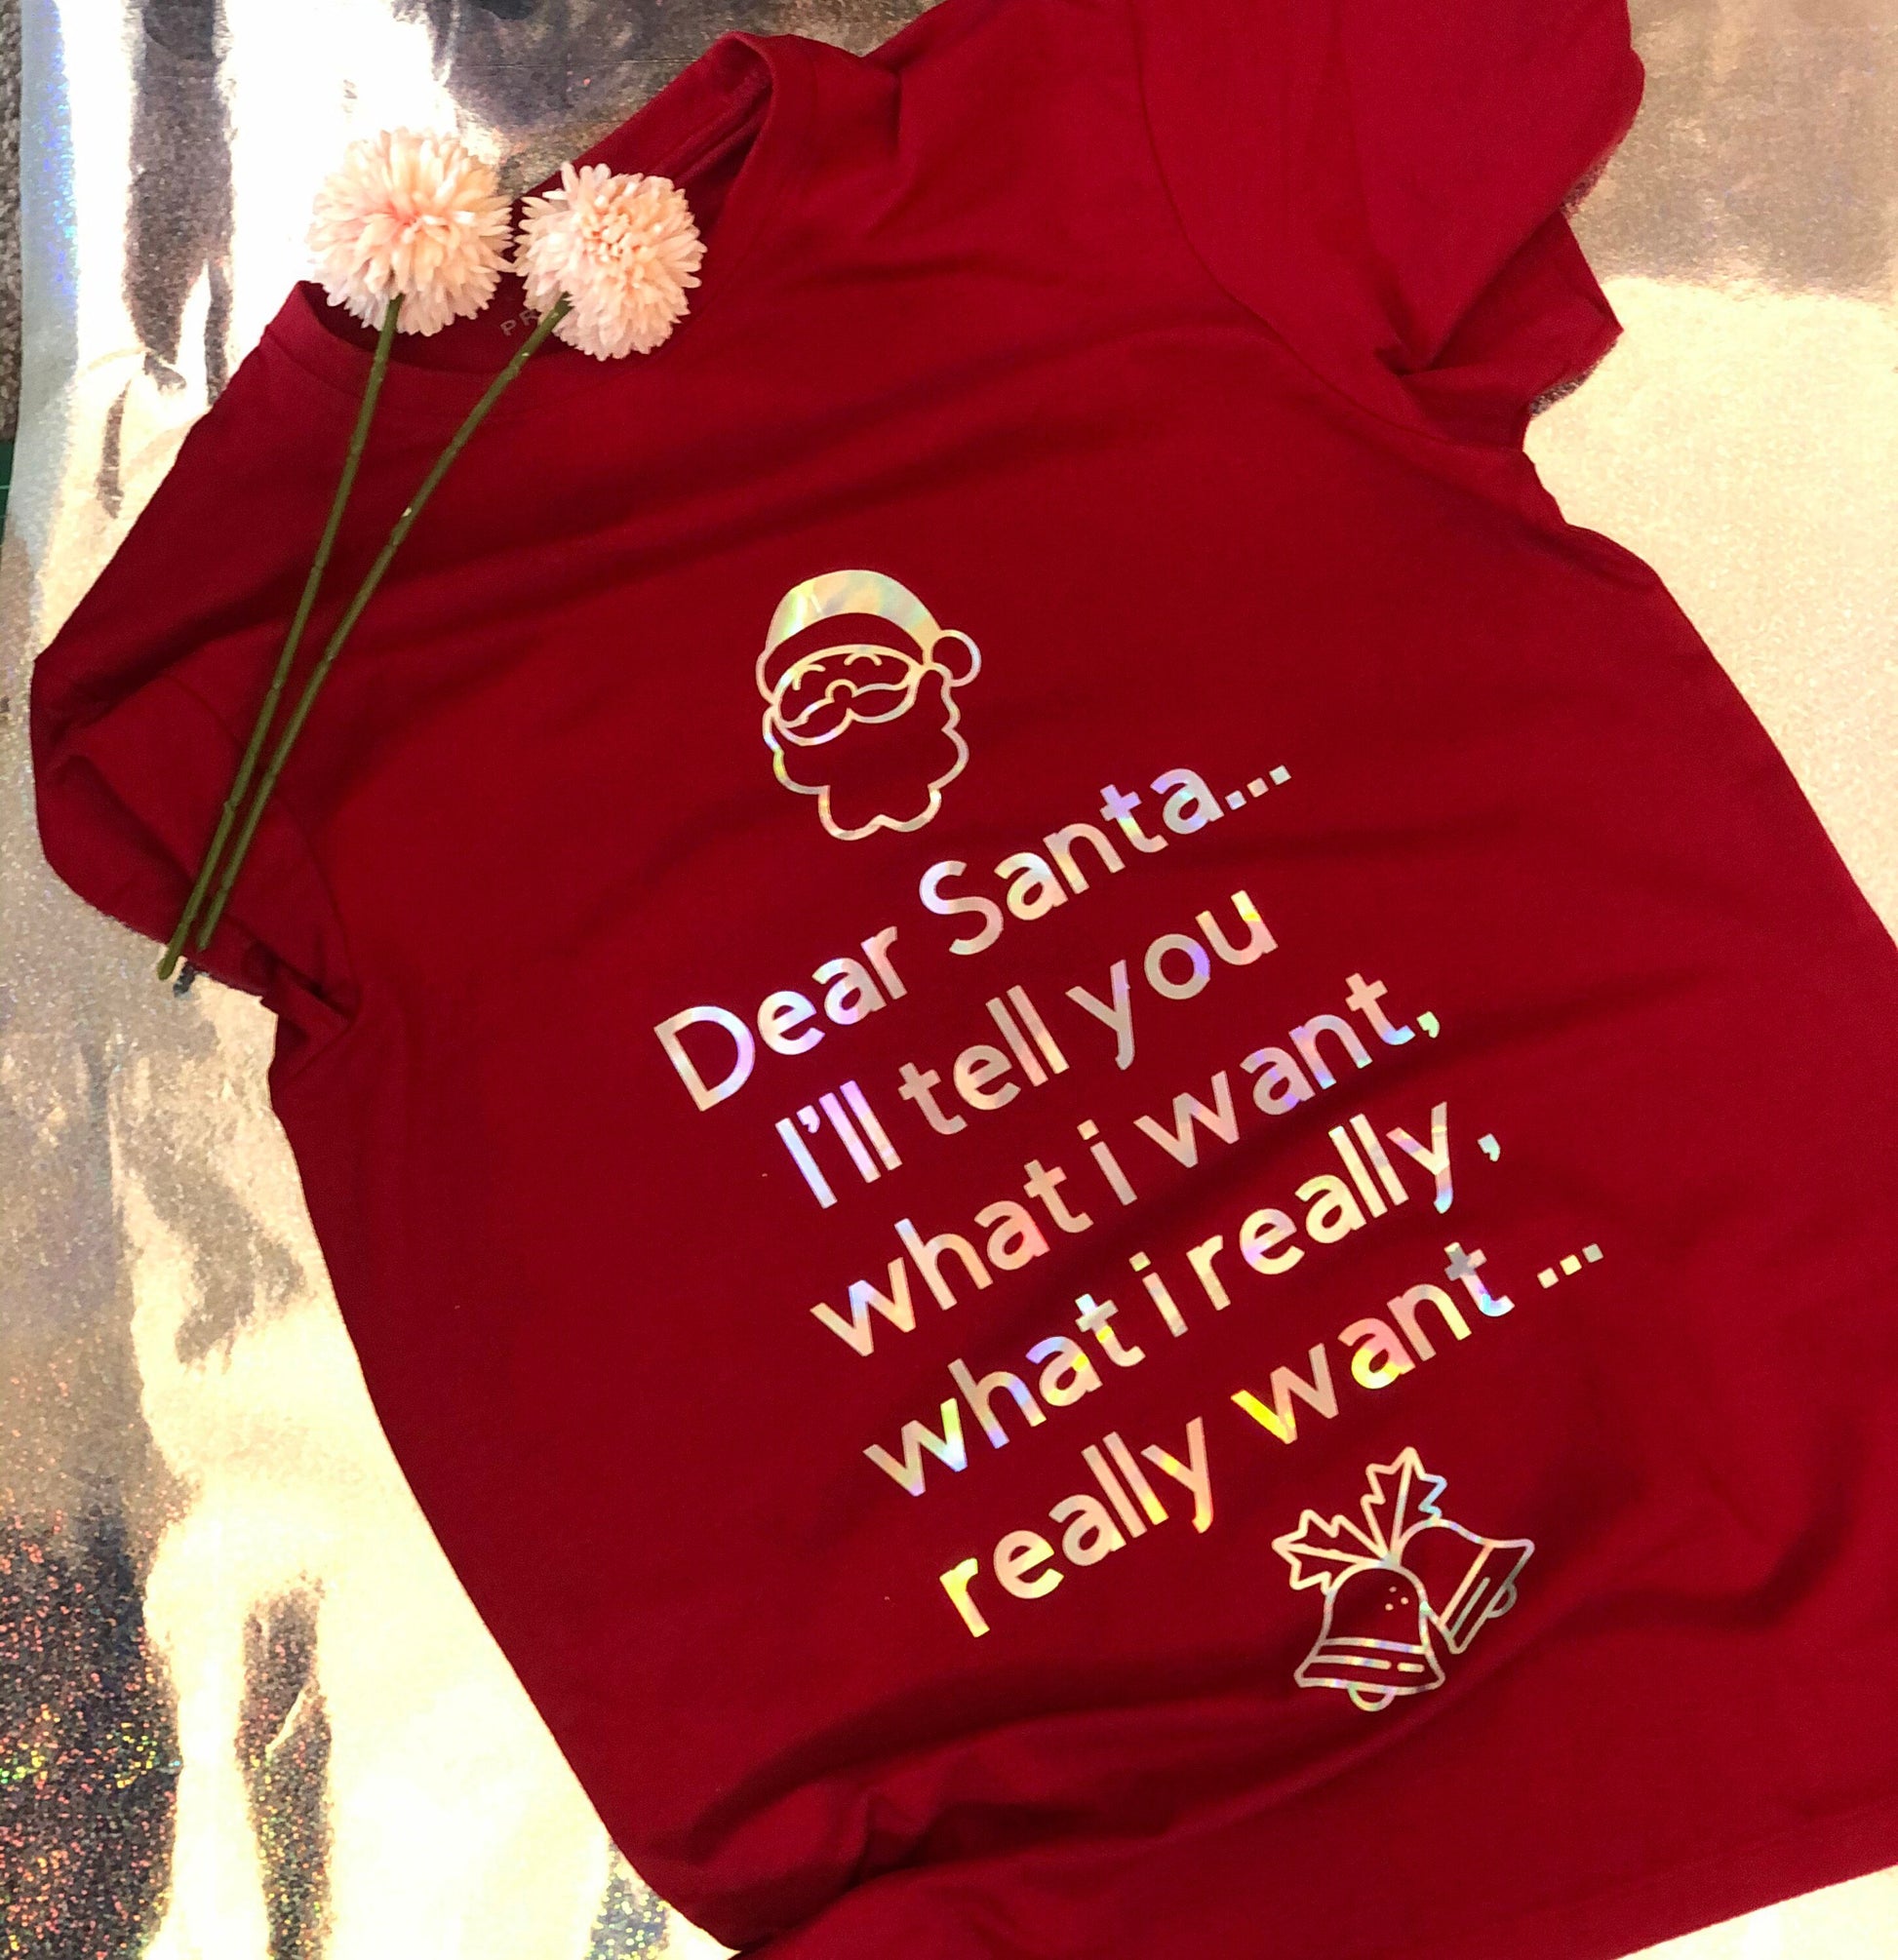 Dear Santa, Tell you what I really, really want Christmas Slogan T-shirt